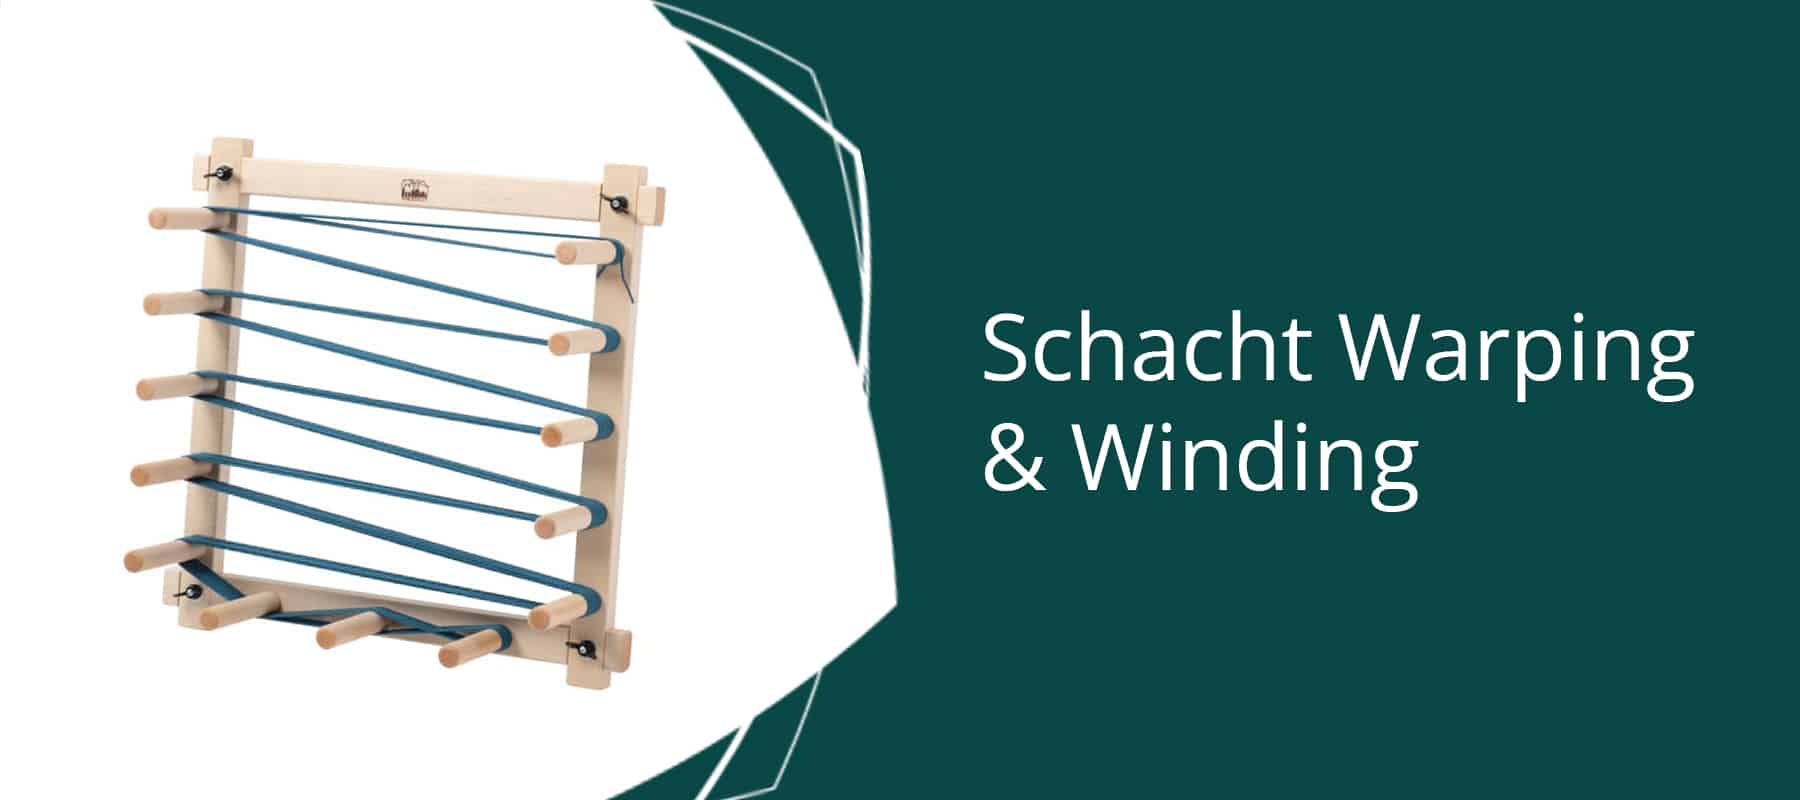 Schacht Warping & Winding